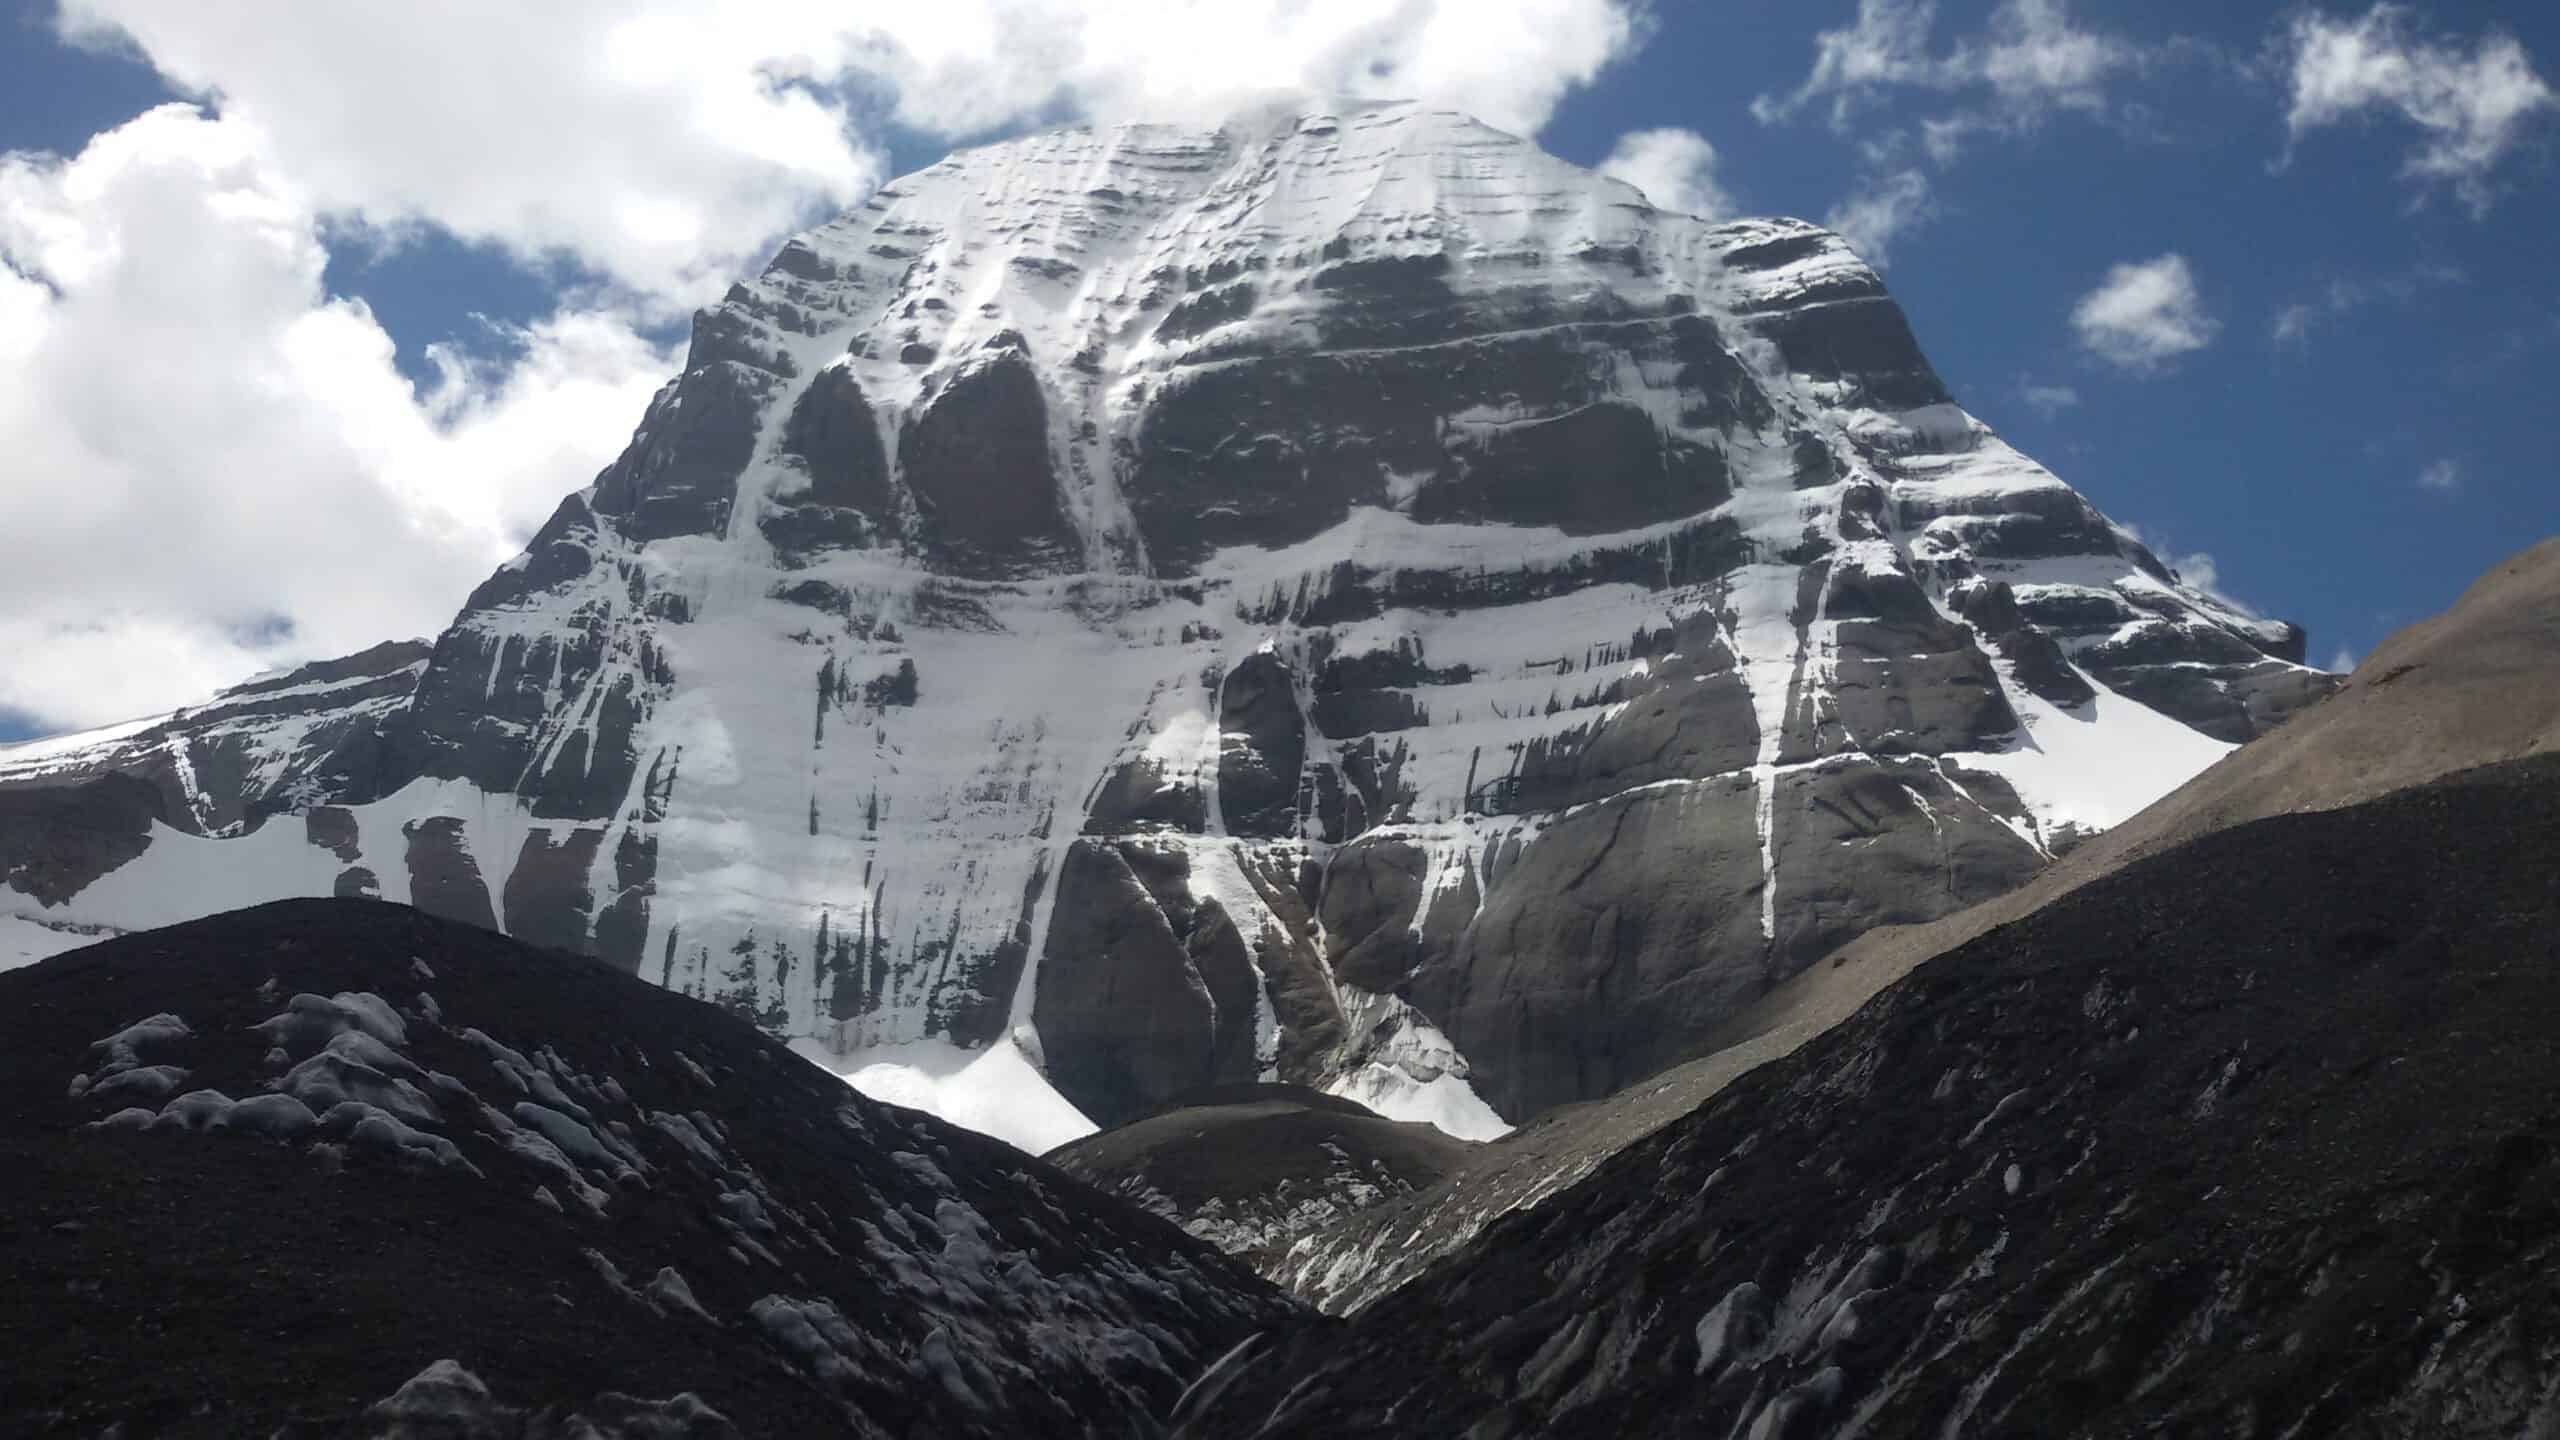 The holy Mount Kailash